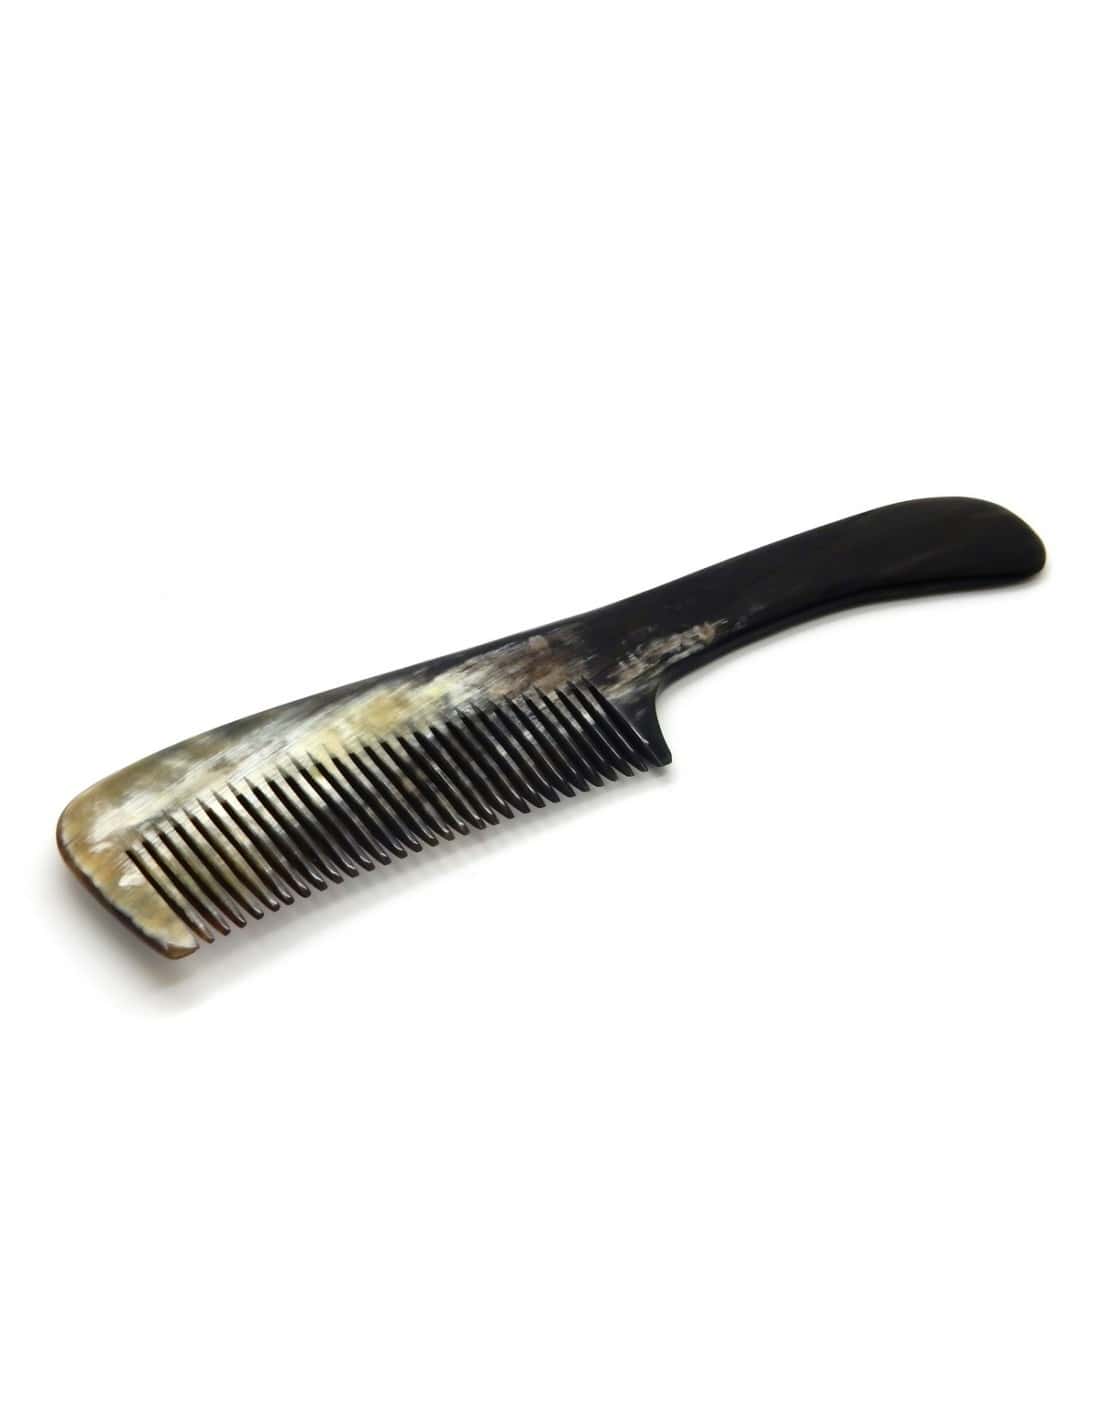 Peigne de poche/barbe en corne véritable (P4) - 12,5cm - Gentleman Barbier